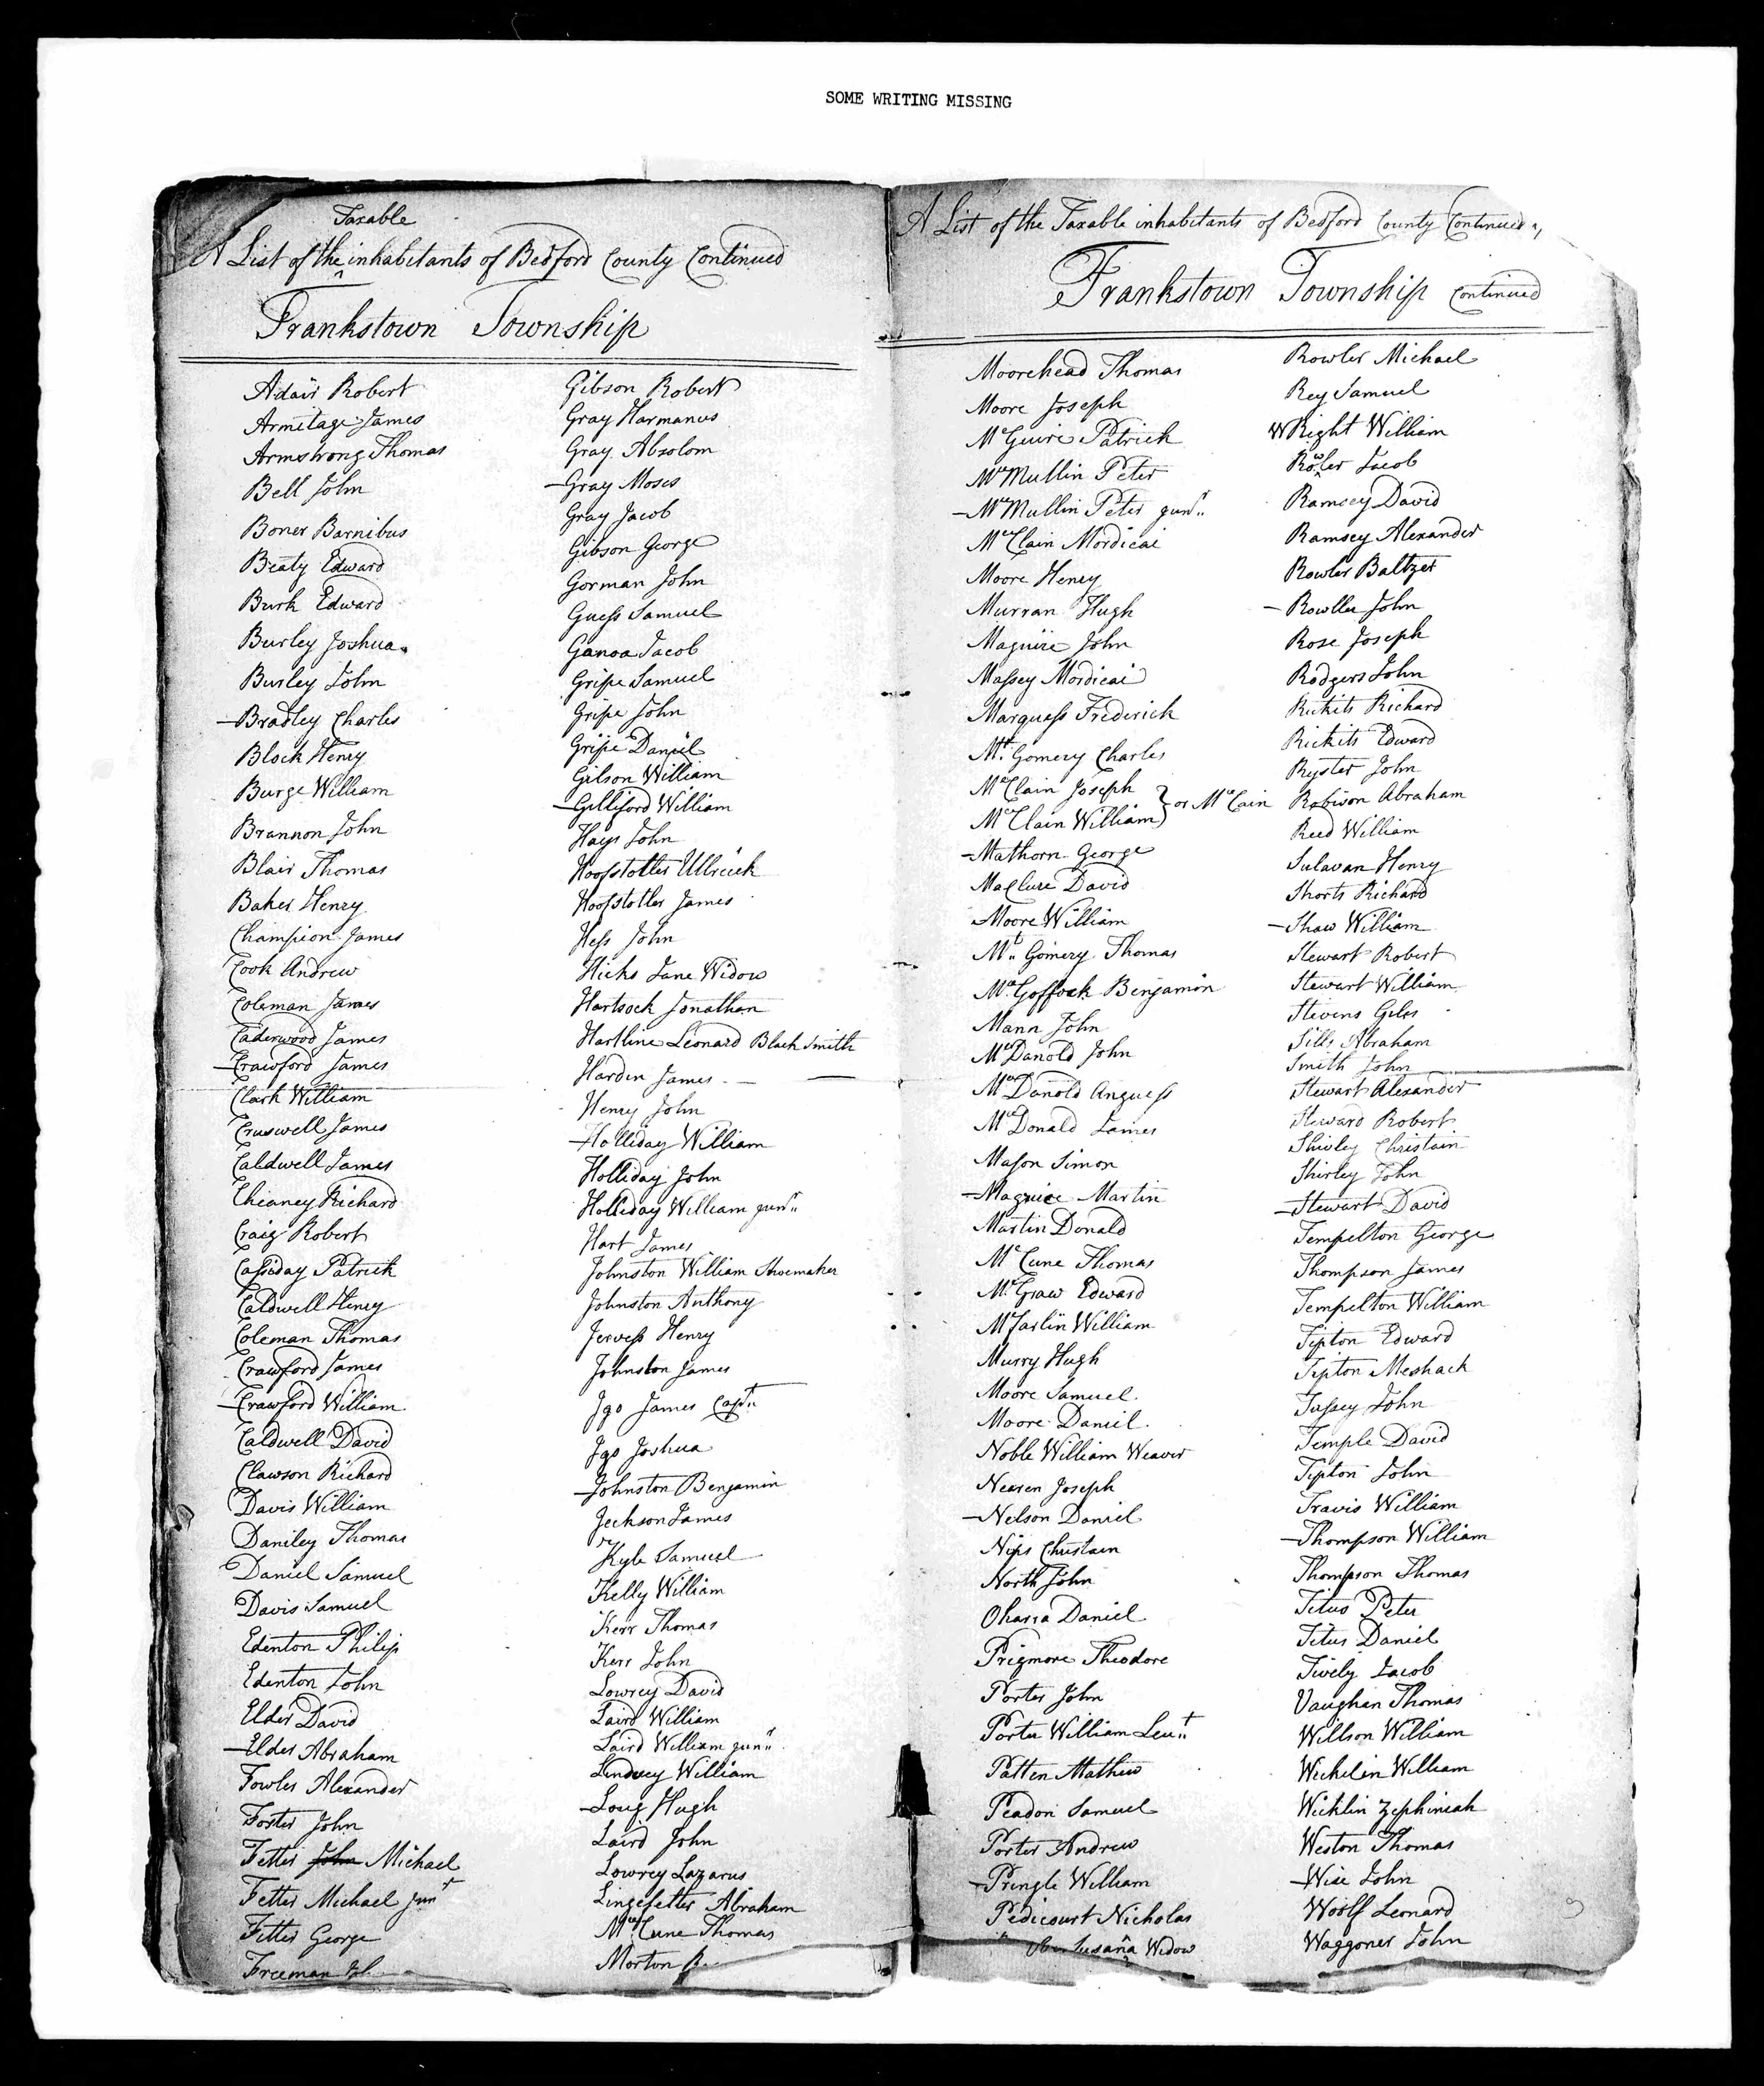 Pennsylvania, Septennial Census, 1779-1863